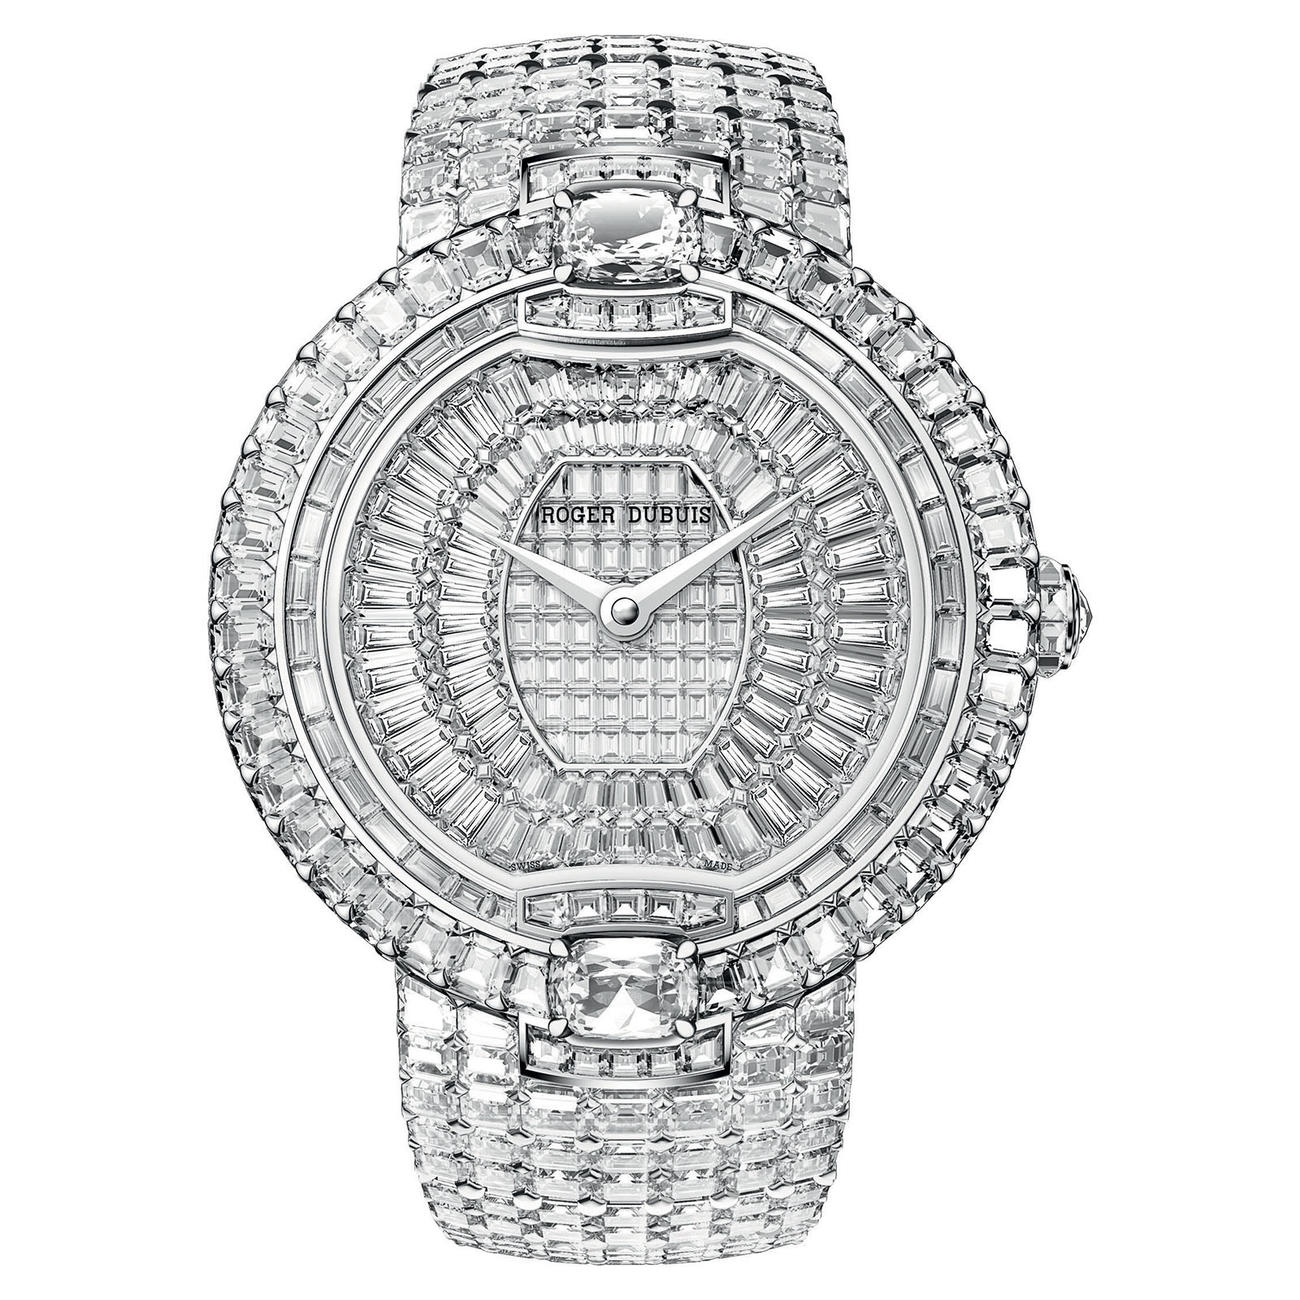 Extremely Elegant Roger Dubuis Velvet Ribbon Diamonds Watch